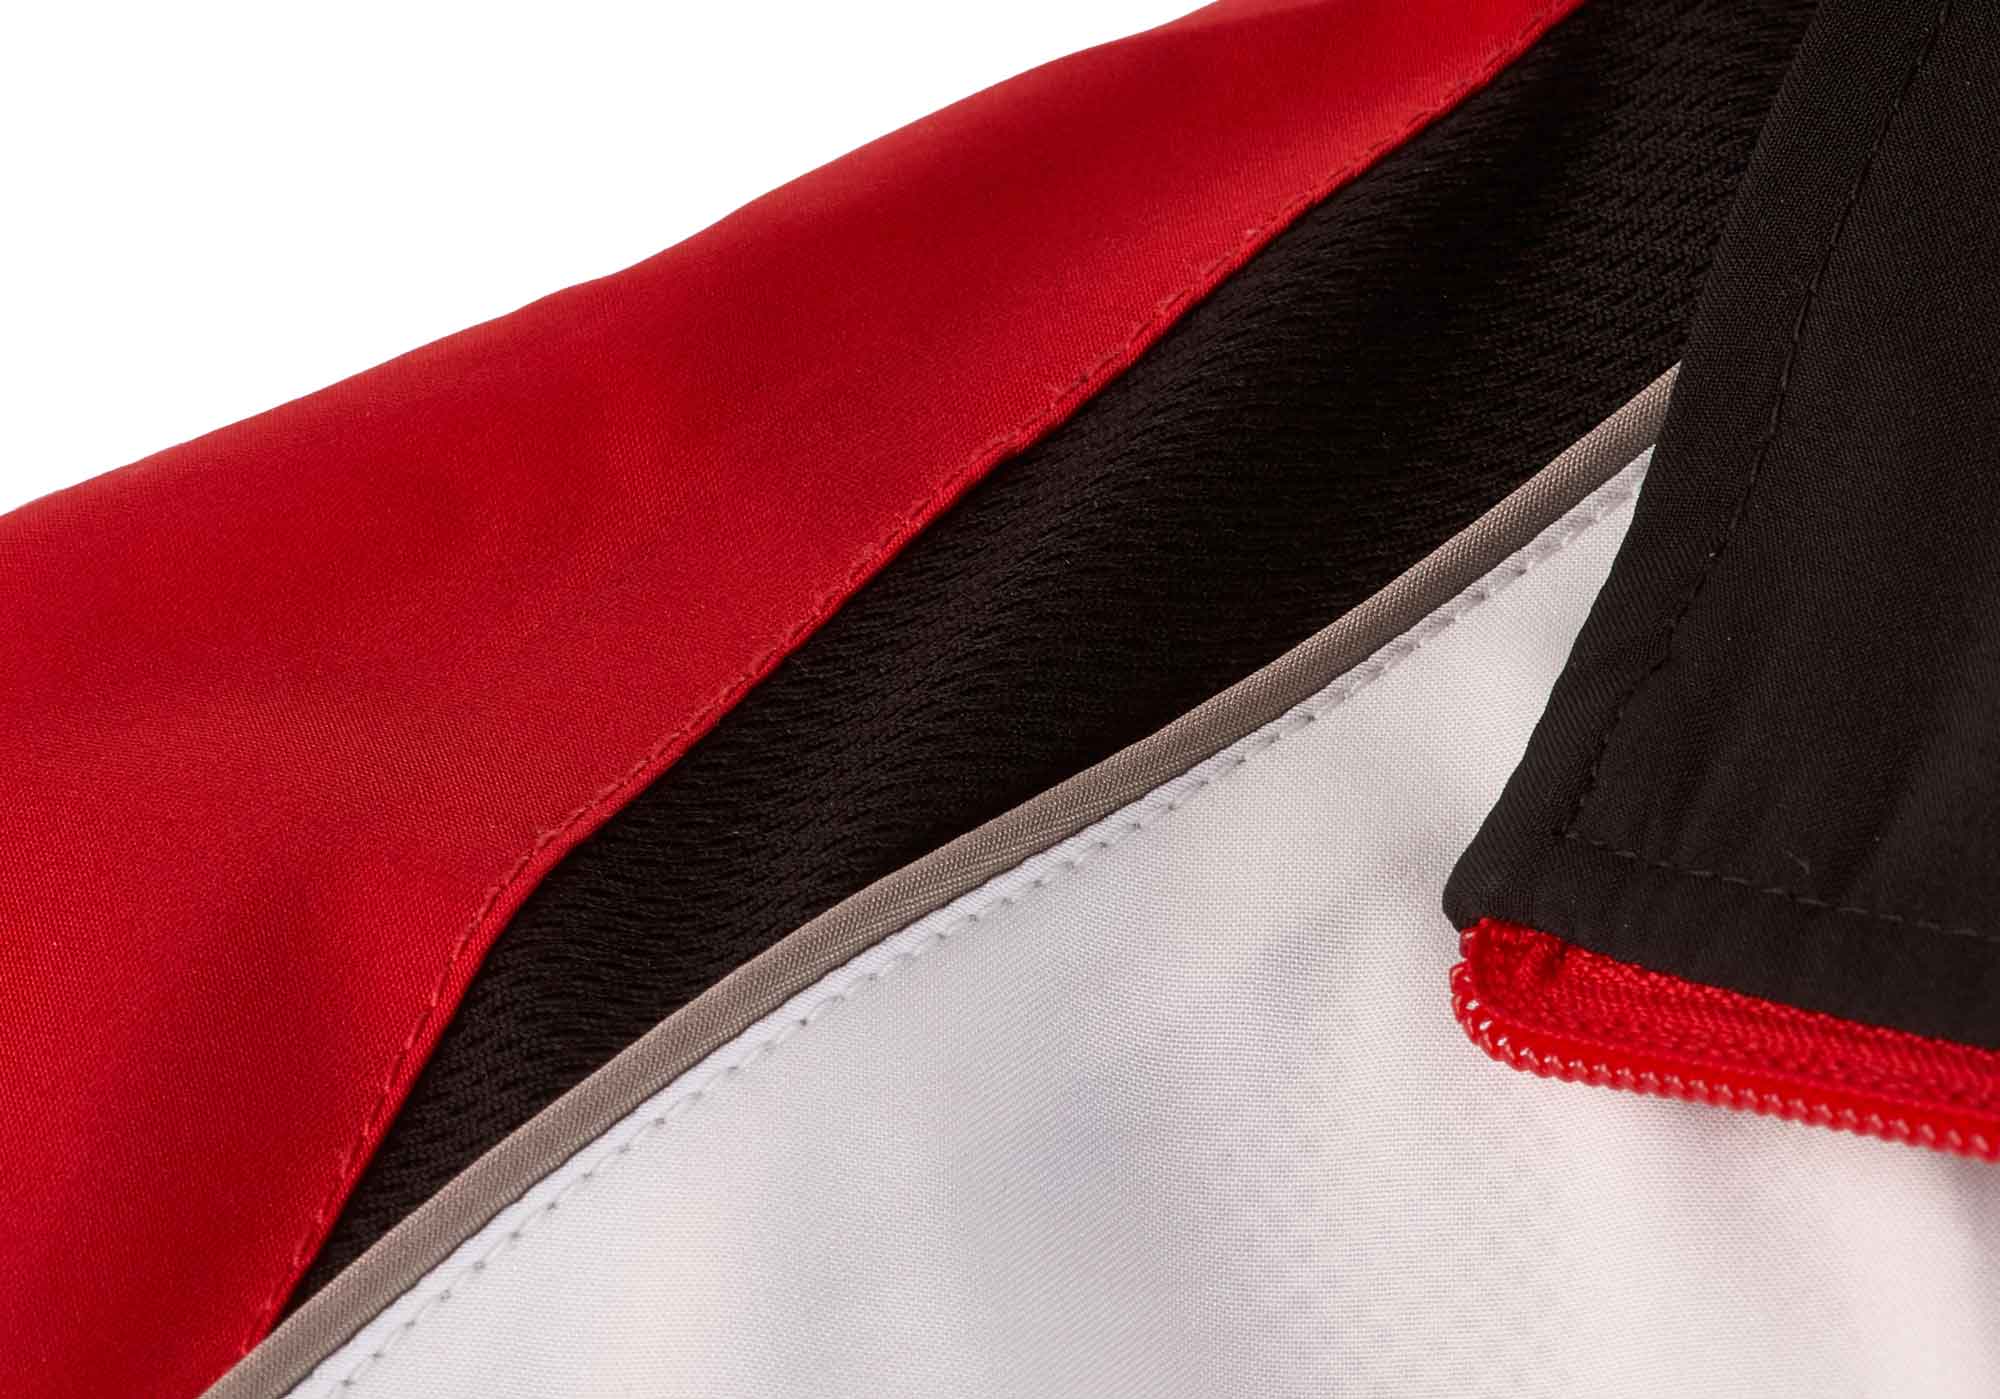 Ju-Sports C2 zip-up team jacket white/red